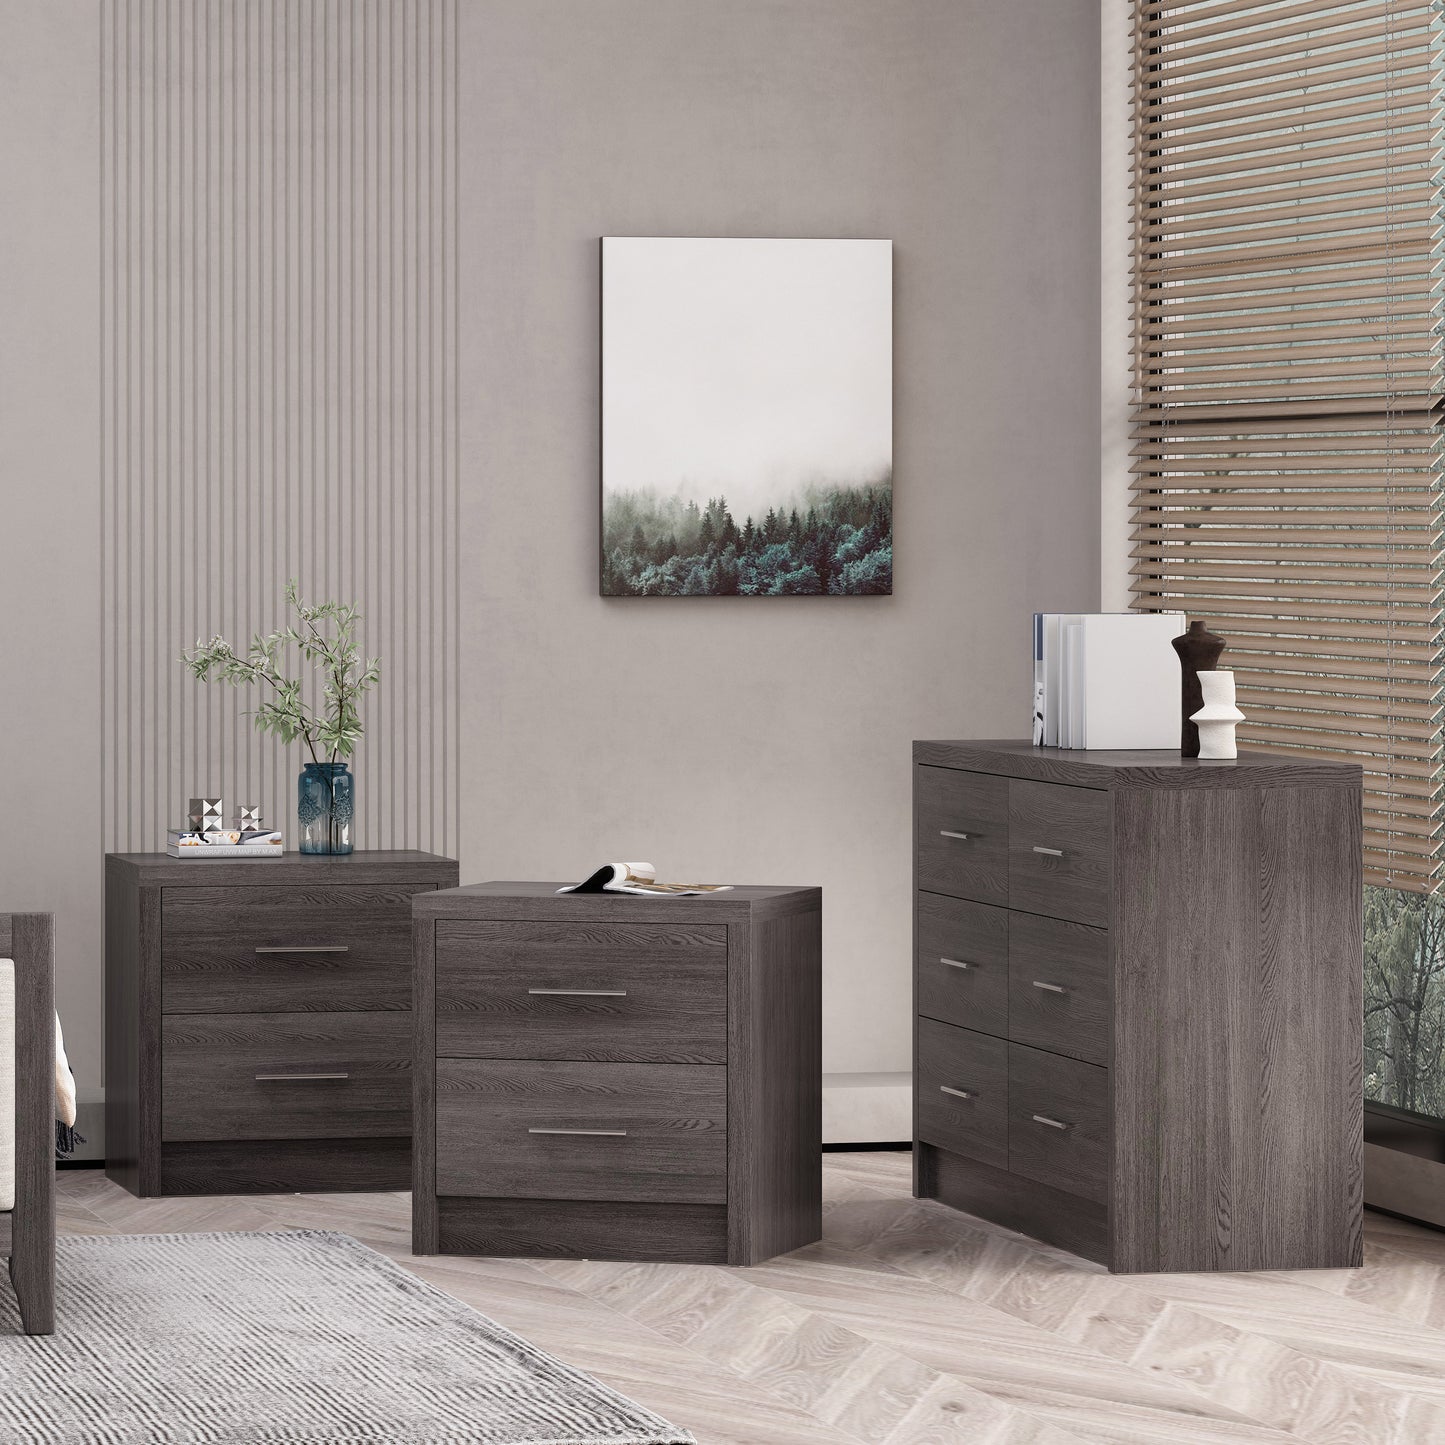 Marlette Modern 3 Piece Double Dresser and Nightstand Bedroom Set